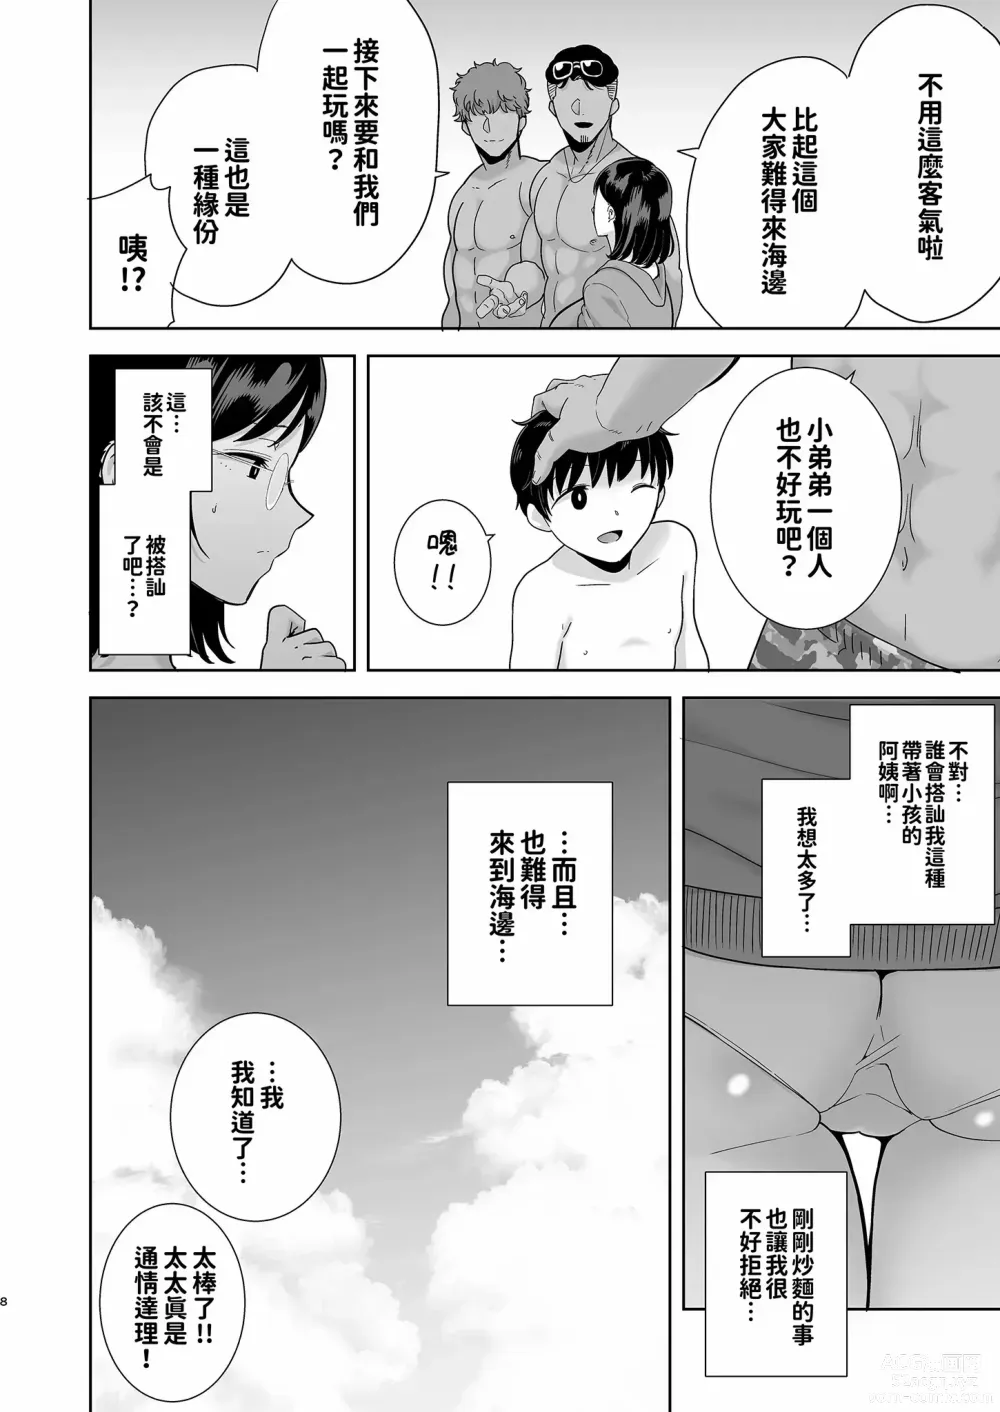 Page 8 of manga 夏妻1+2